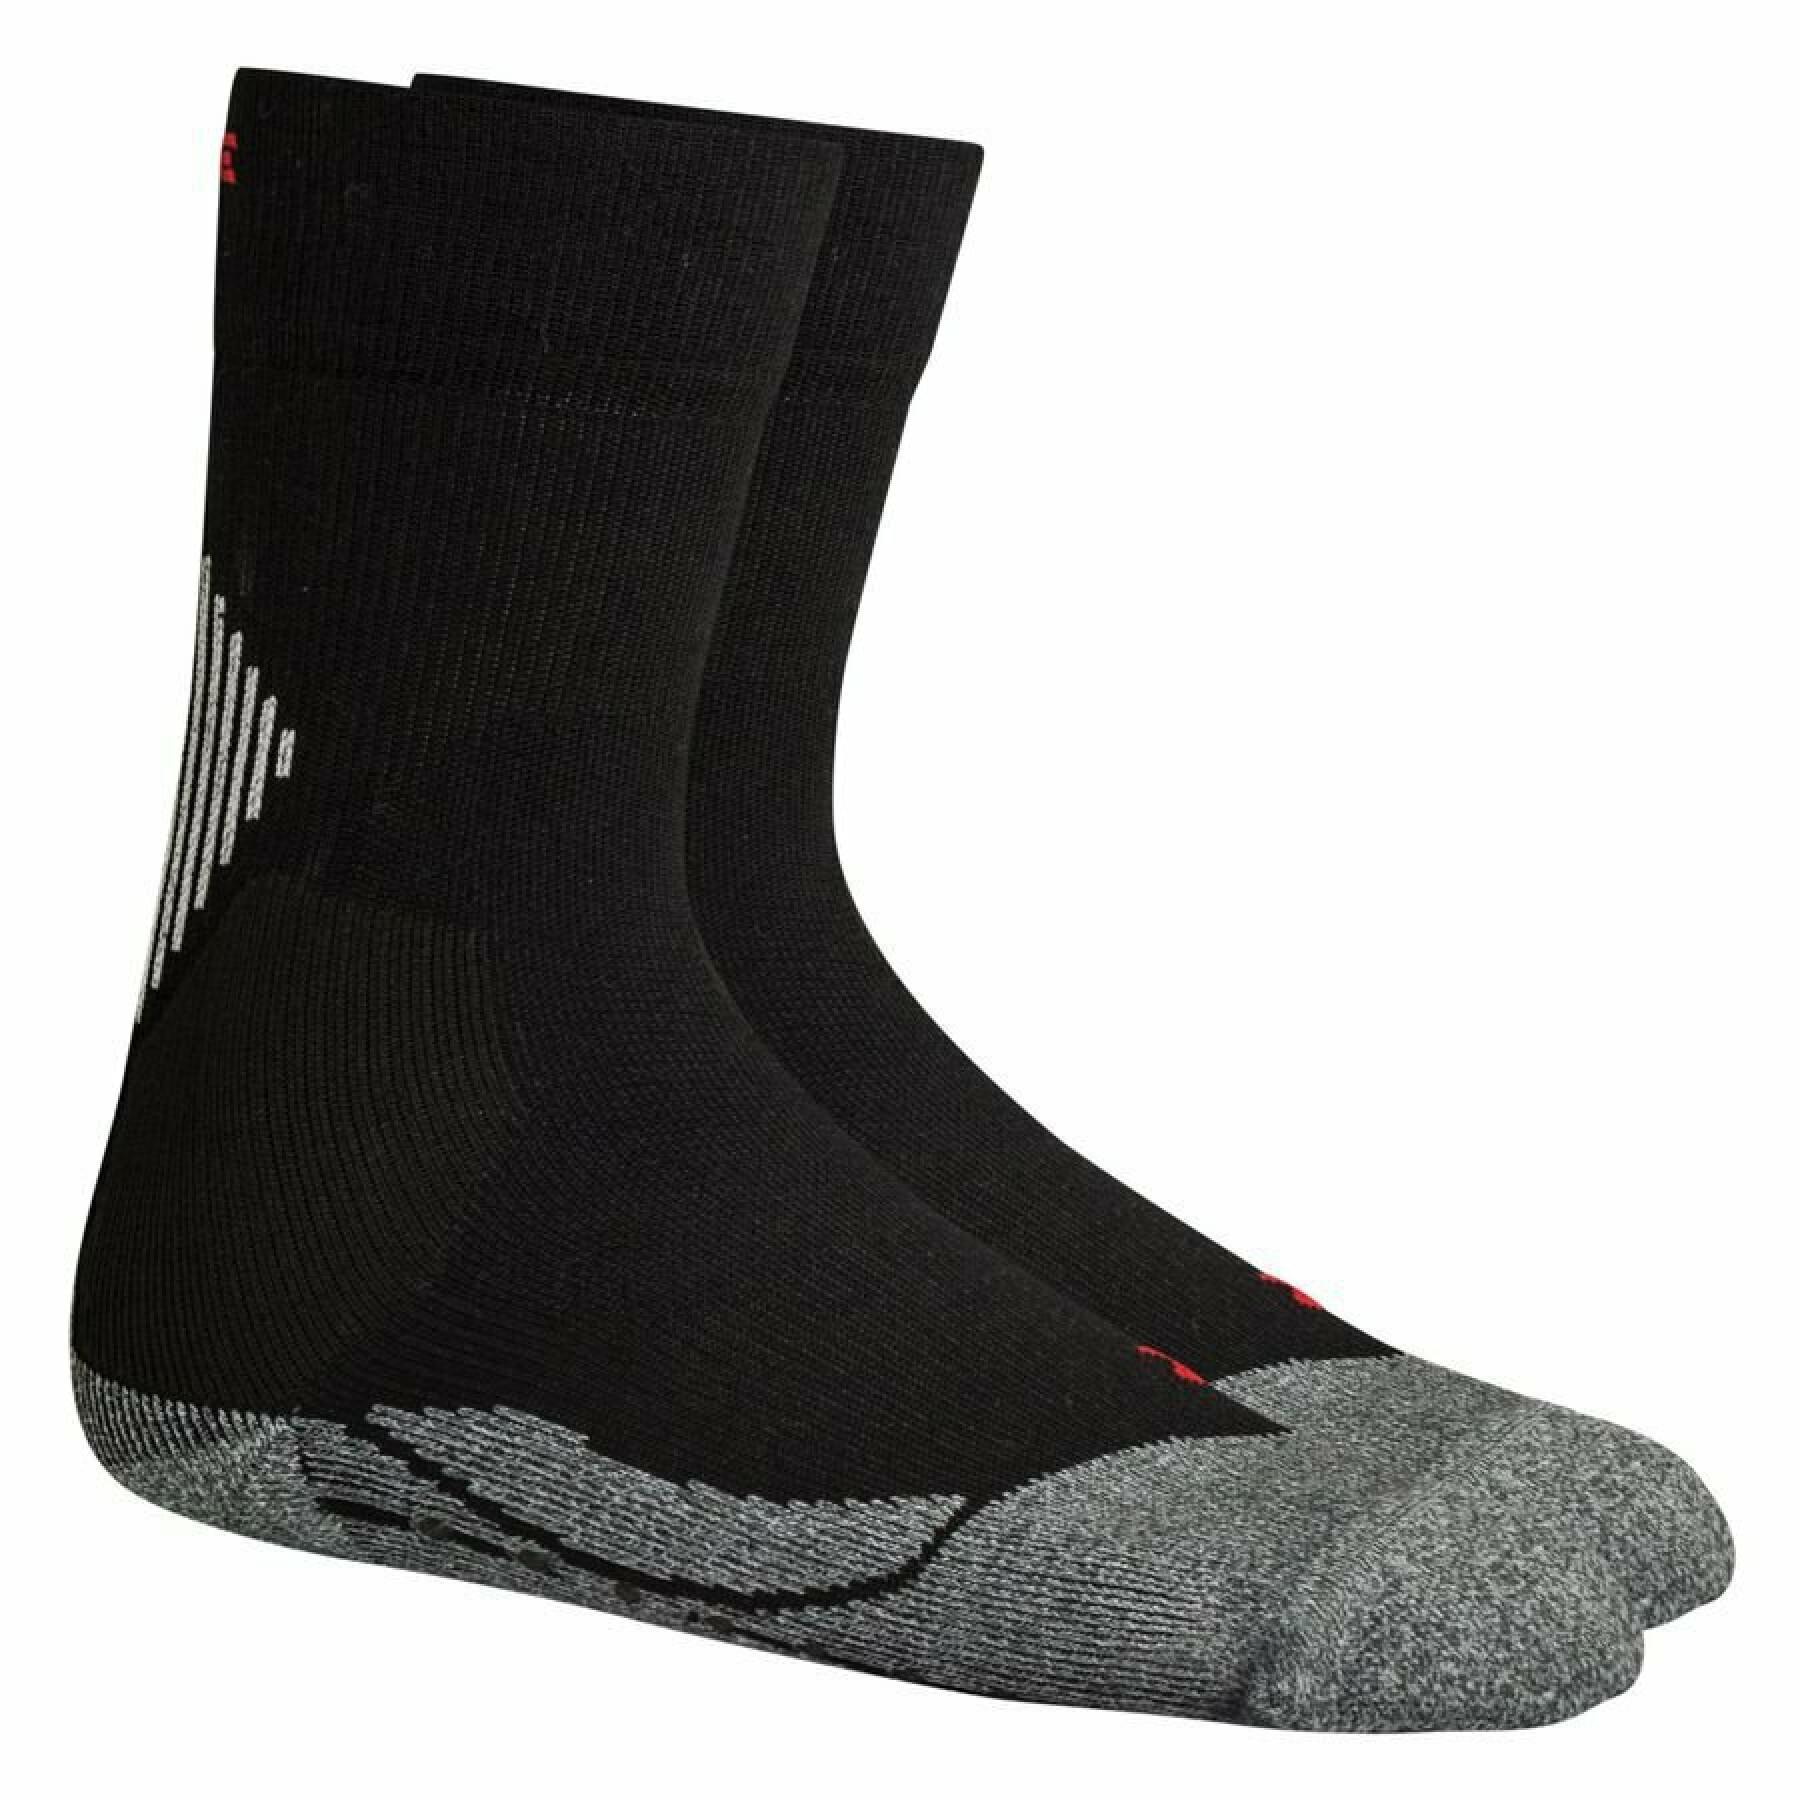 Sports socks Falke 4 Grip - Accessories - Teamwear - Equipment